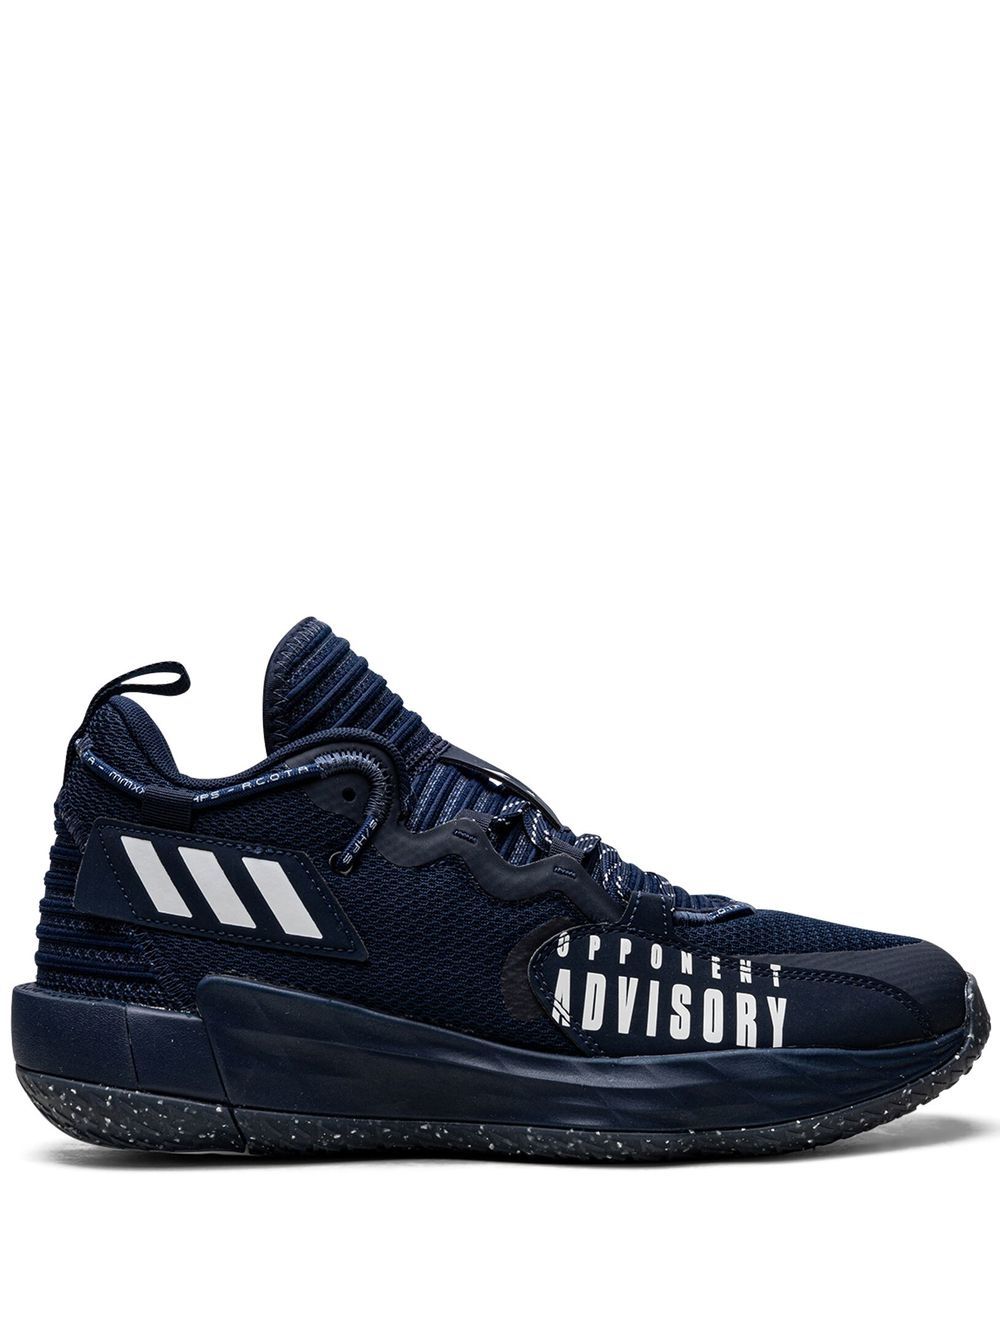 Adidas Originals Dame 7 Extply Low-top Sneakers In Blue